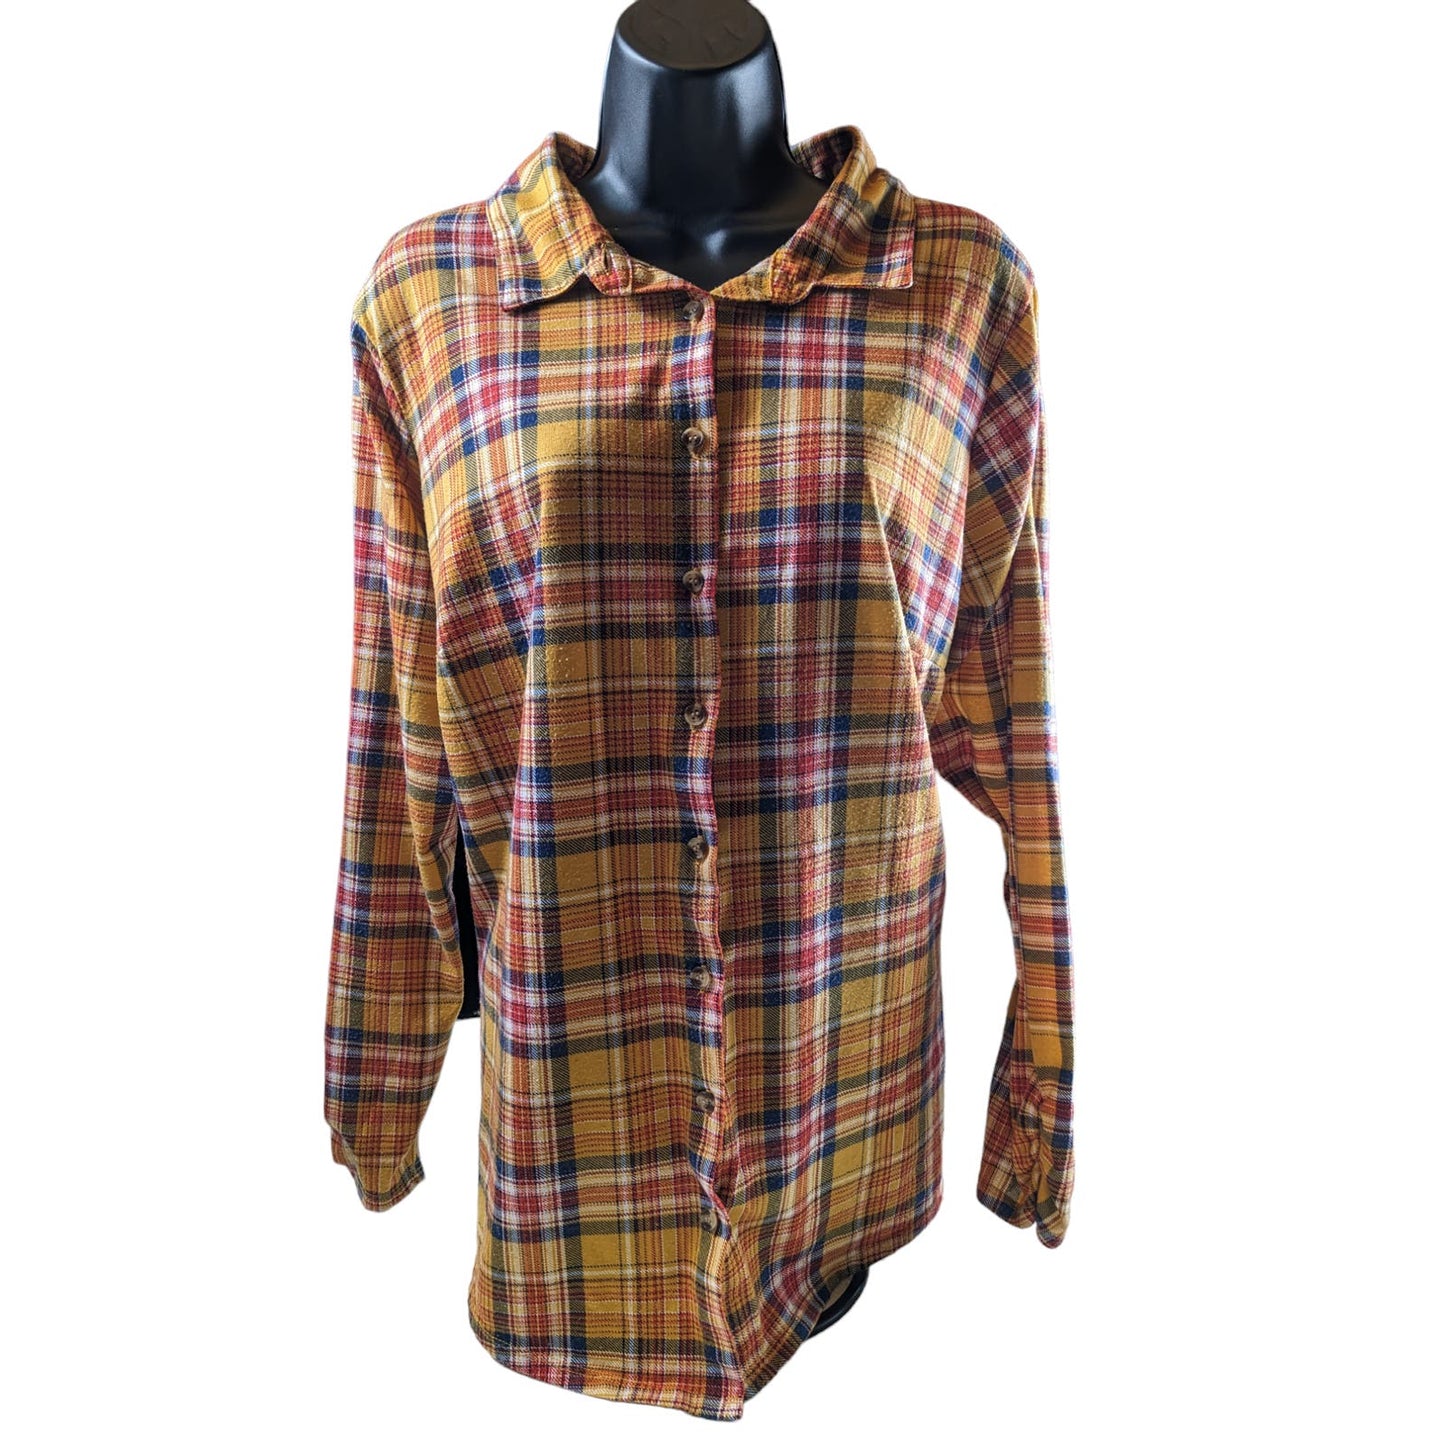 Bobbie Brooks Flannel Shirt Womens Plus 2X Long Sleeve Button Up Light Top Boho